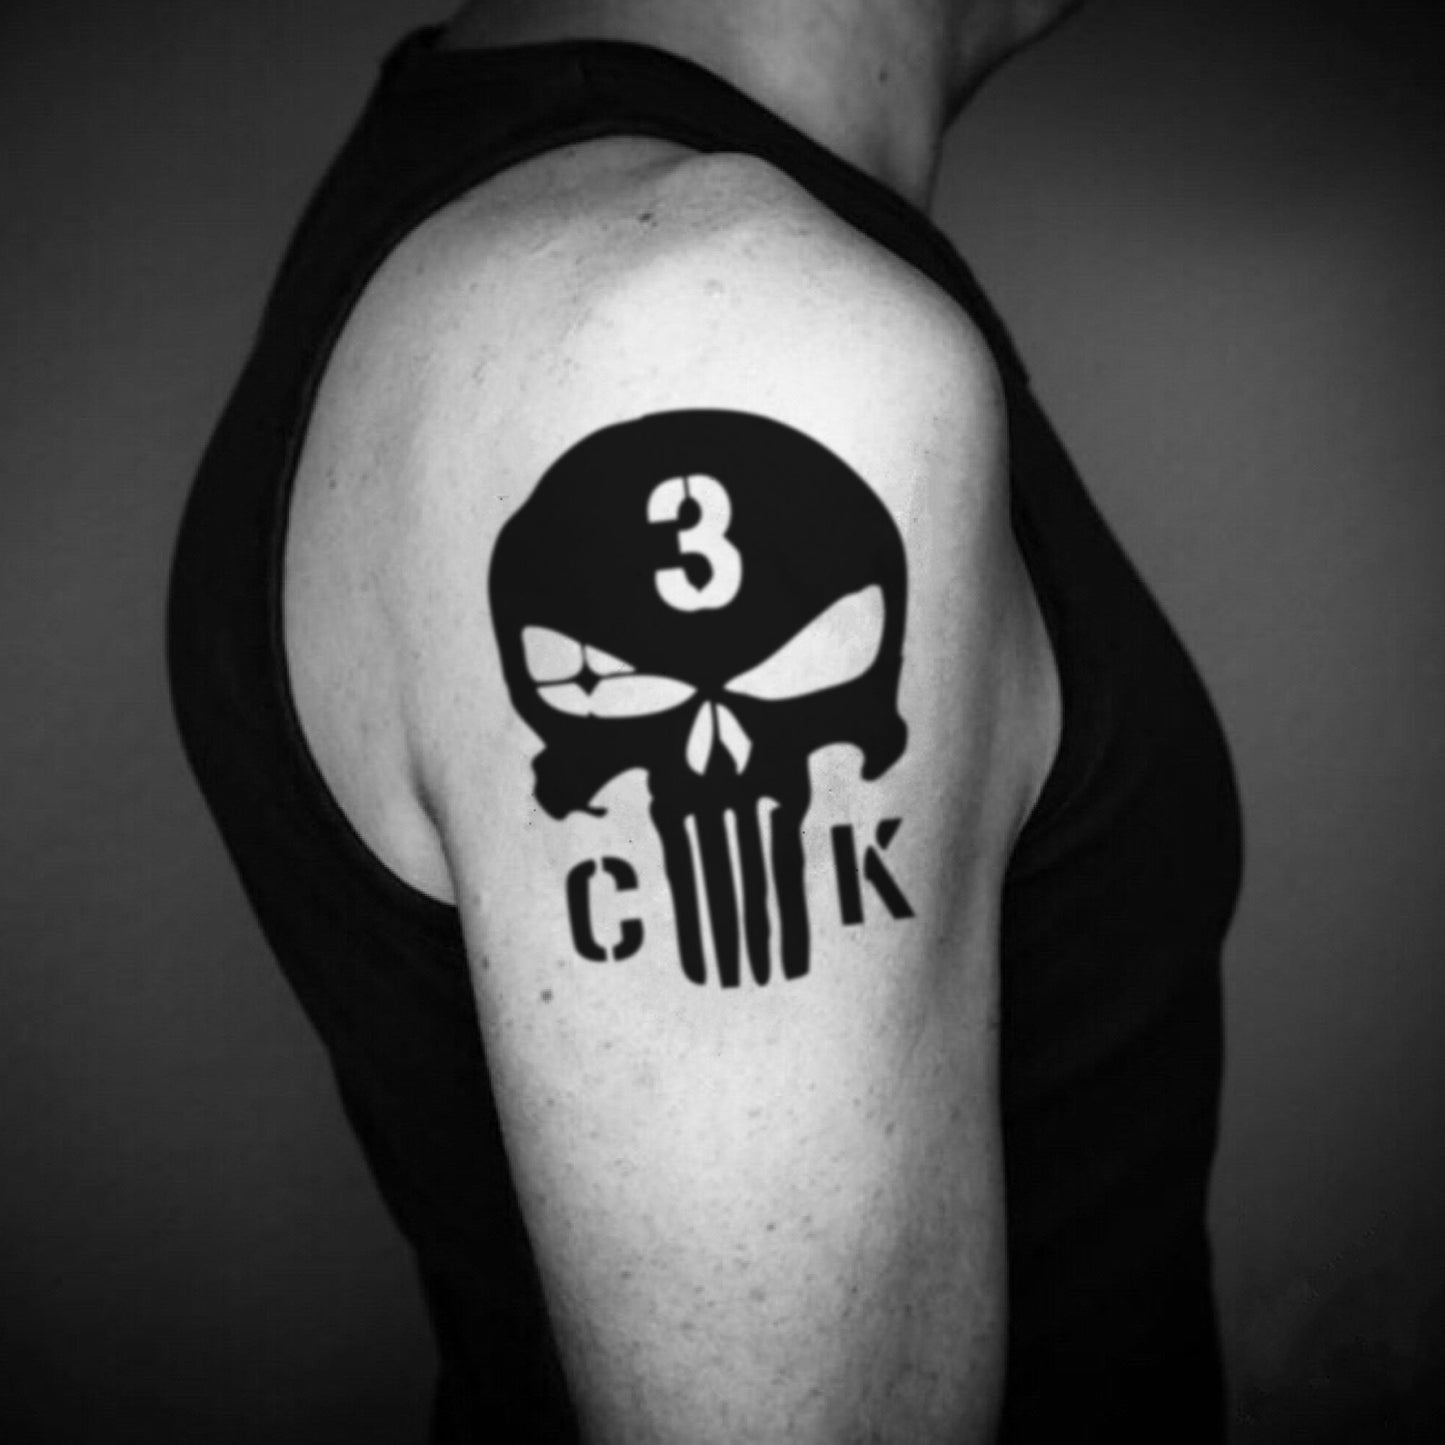 fake big chris kyle illustrative temporary tattoo sticker design idea on upper arm